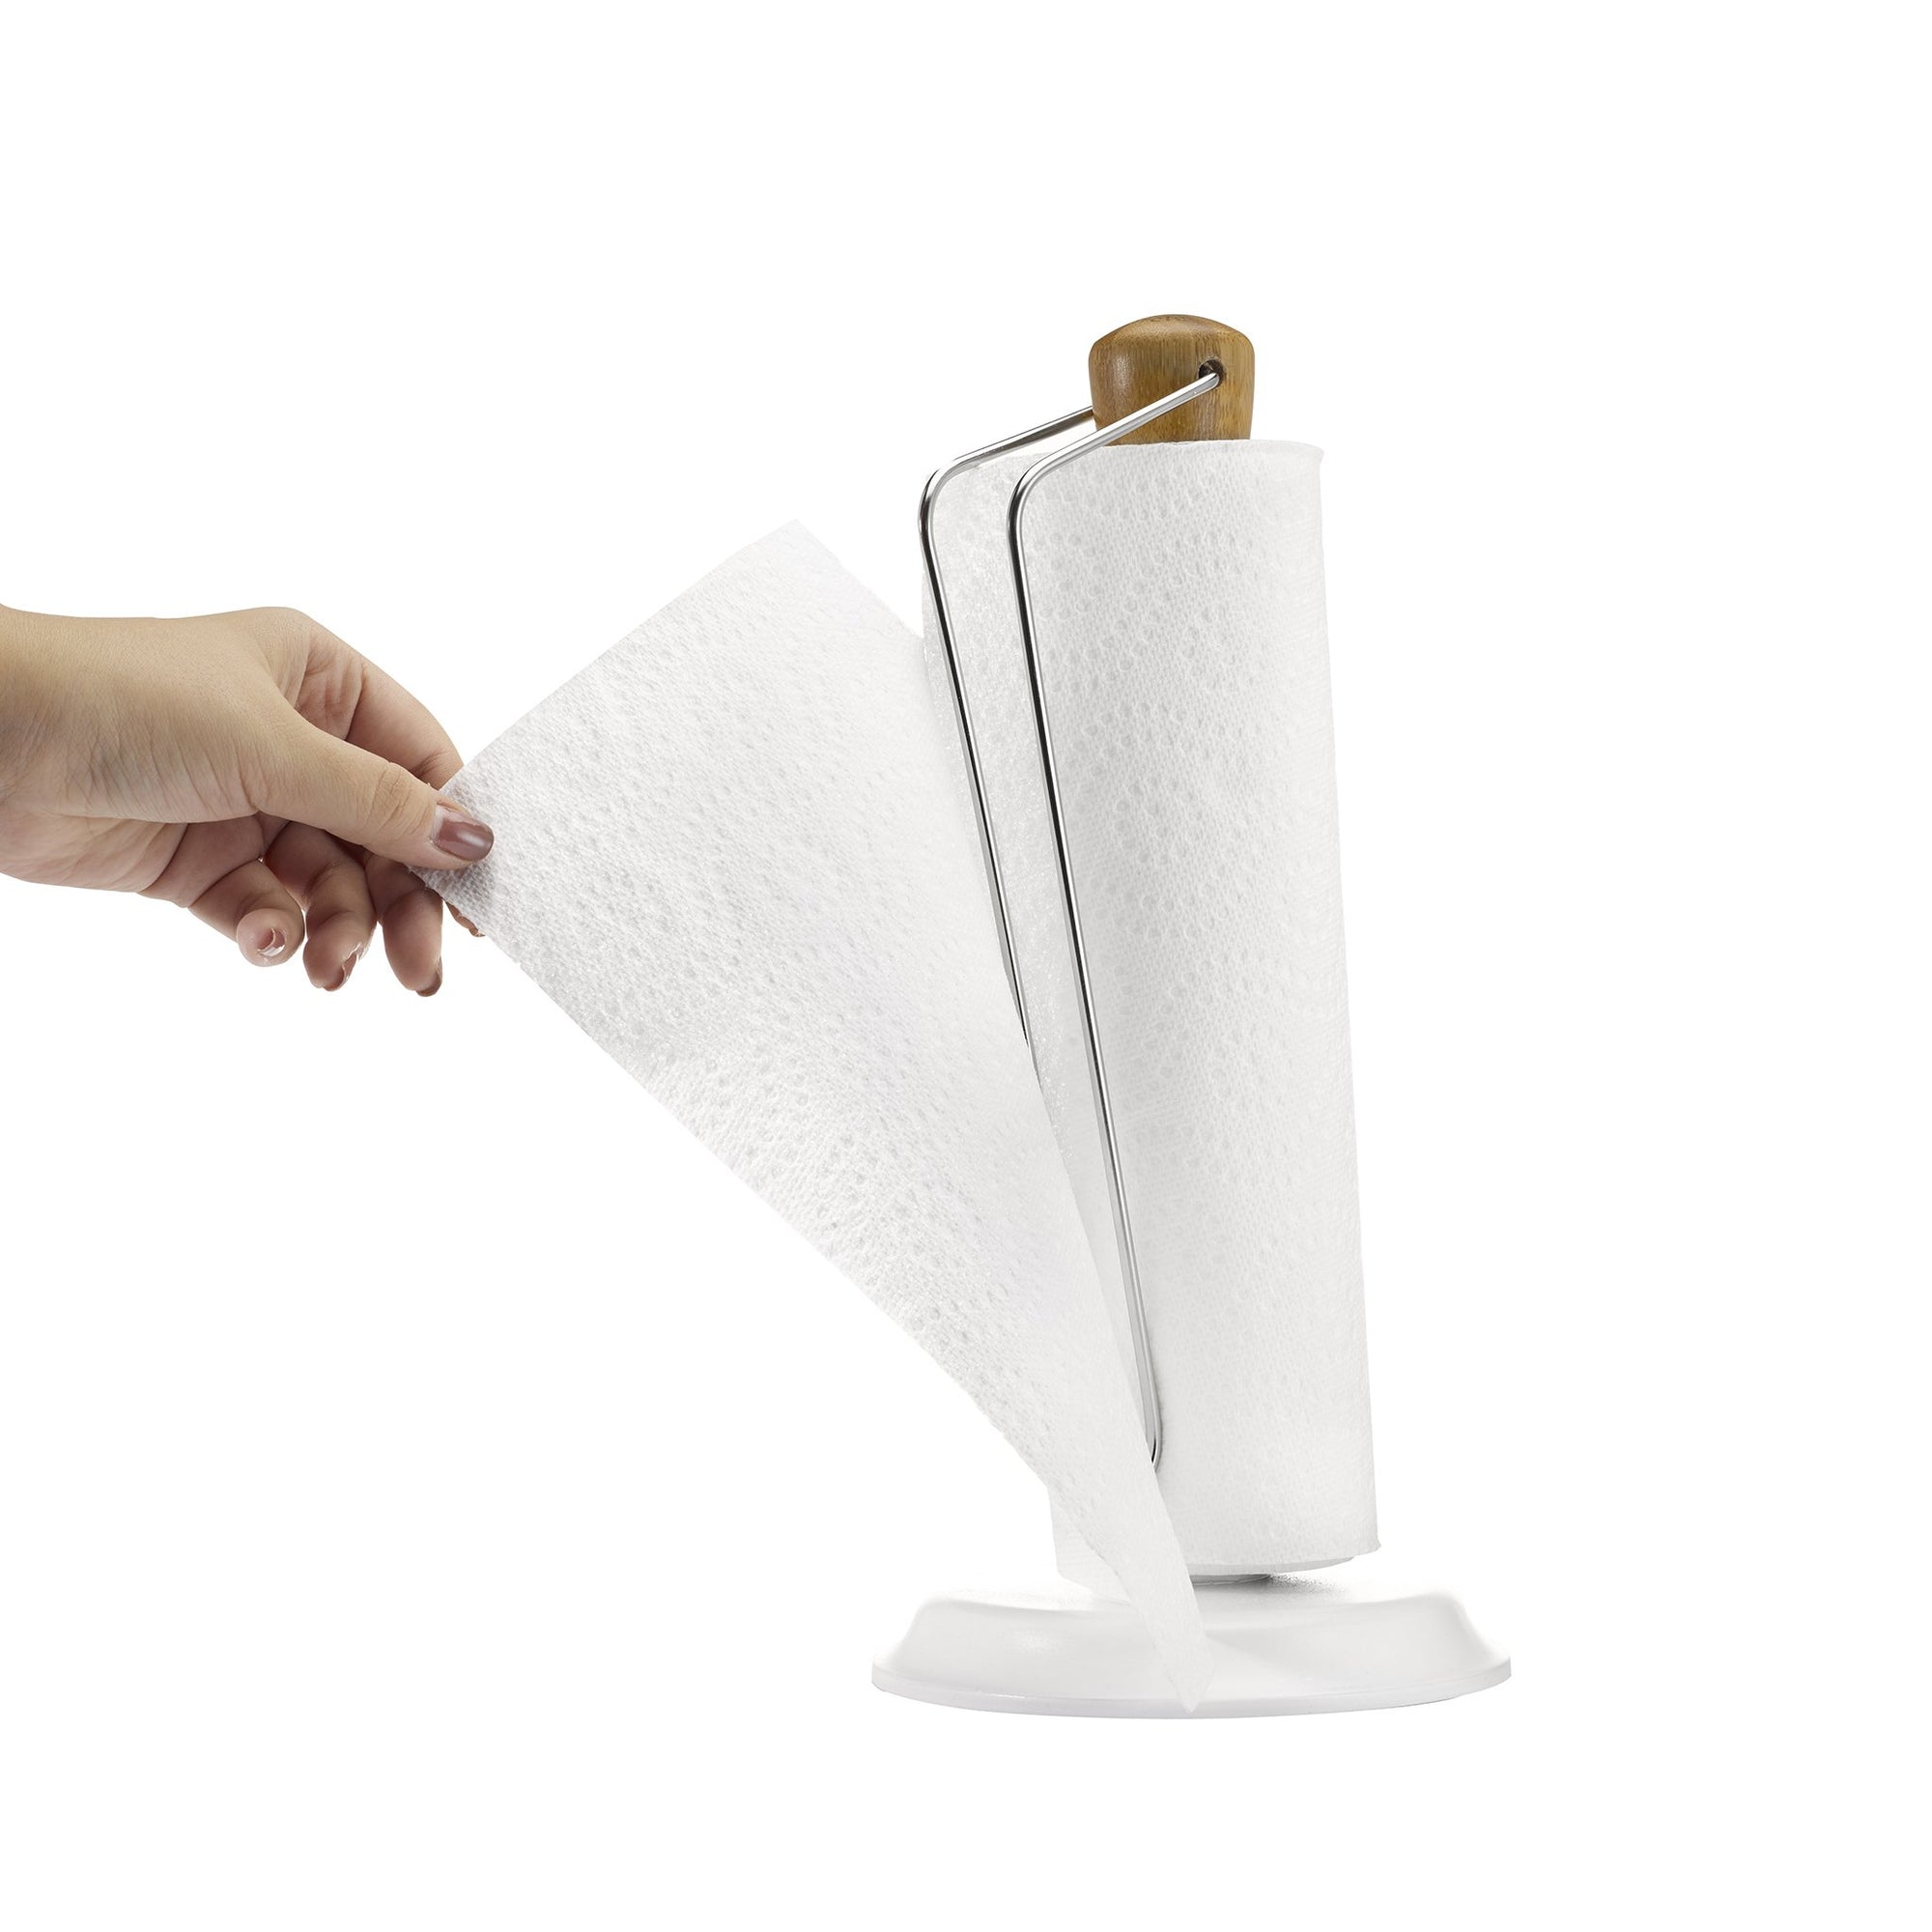 Best Paper Towel Holders - Sous Vide Guy